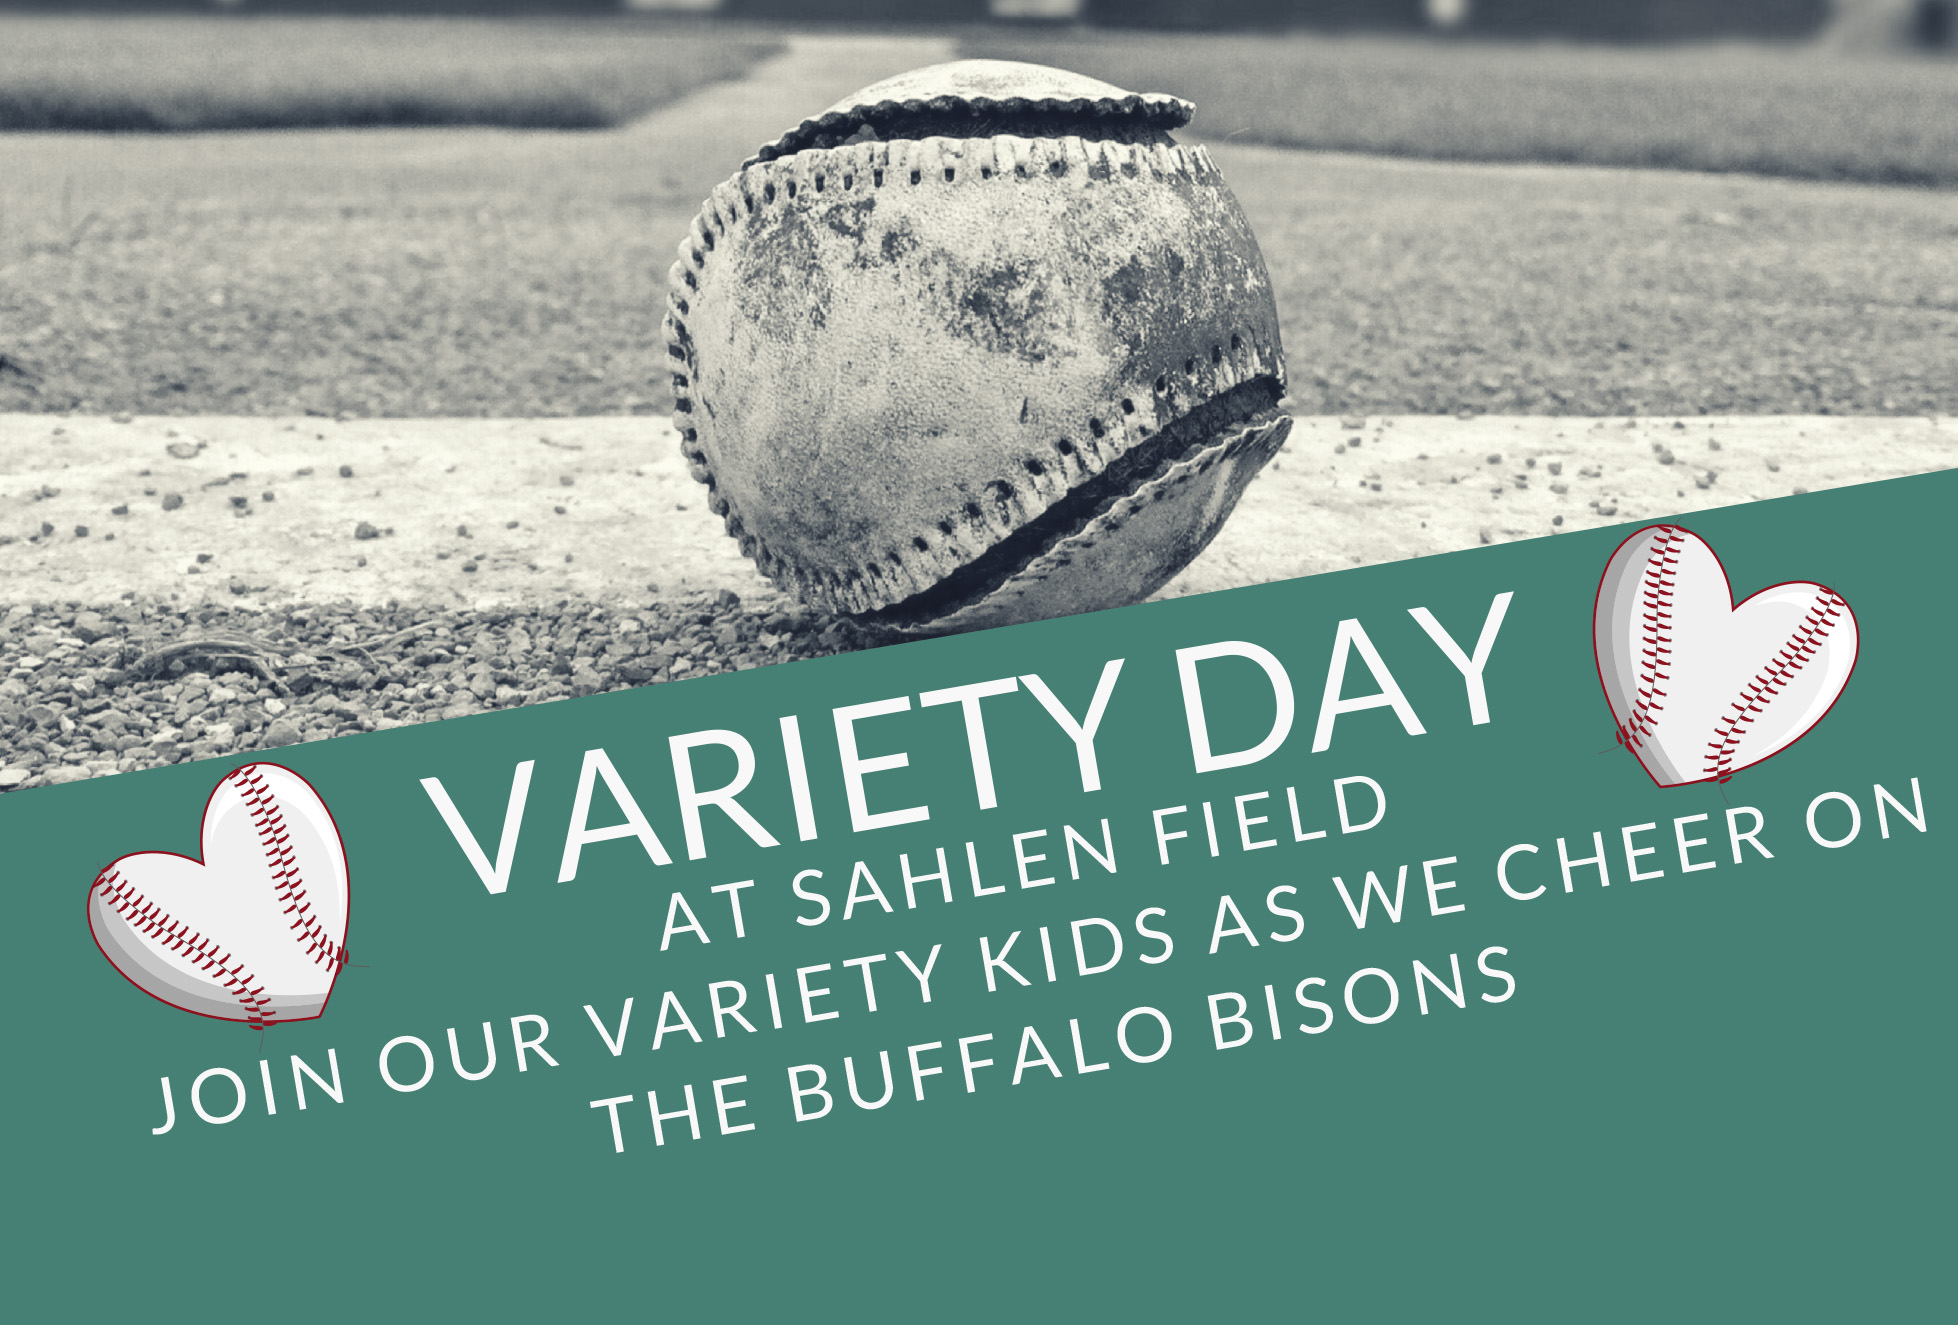 Variety Day at Sahlen Field!